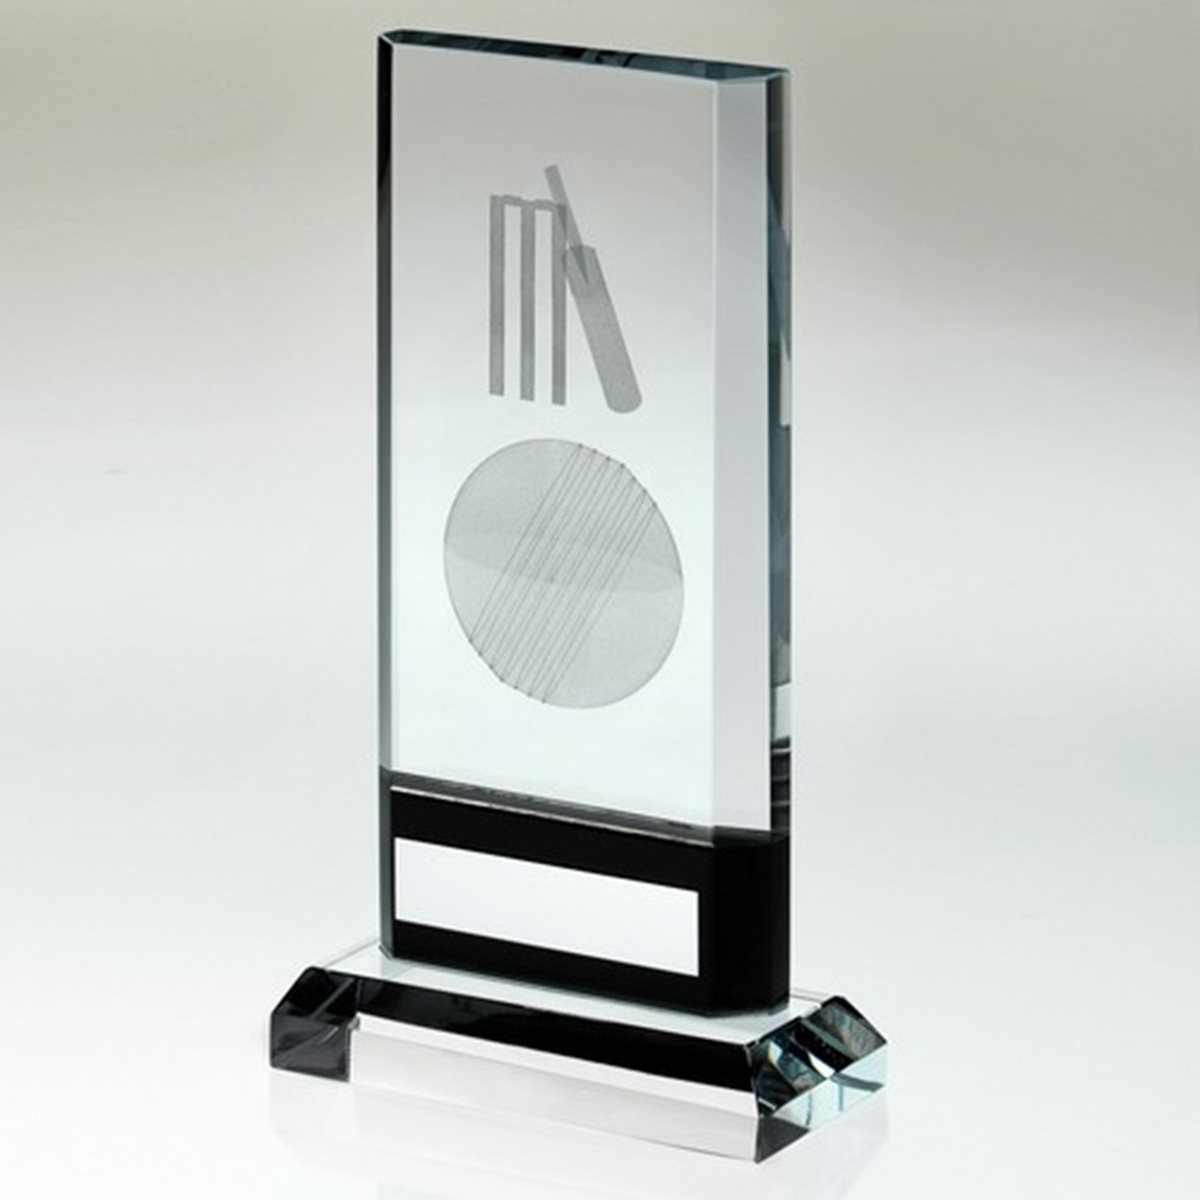 Cricket Glass Award JR6-TD406